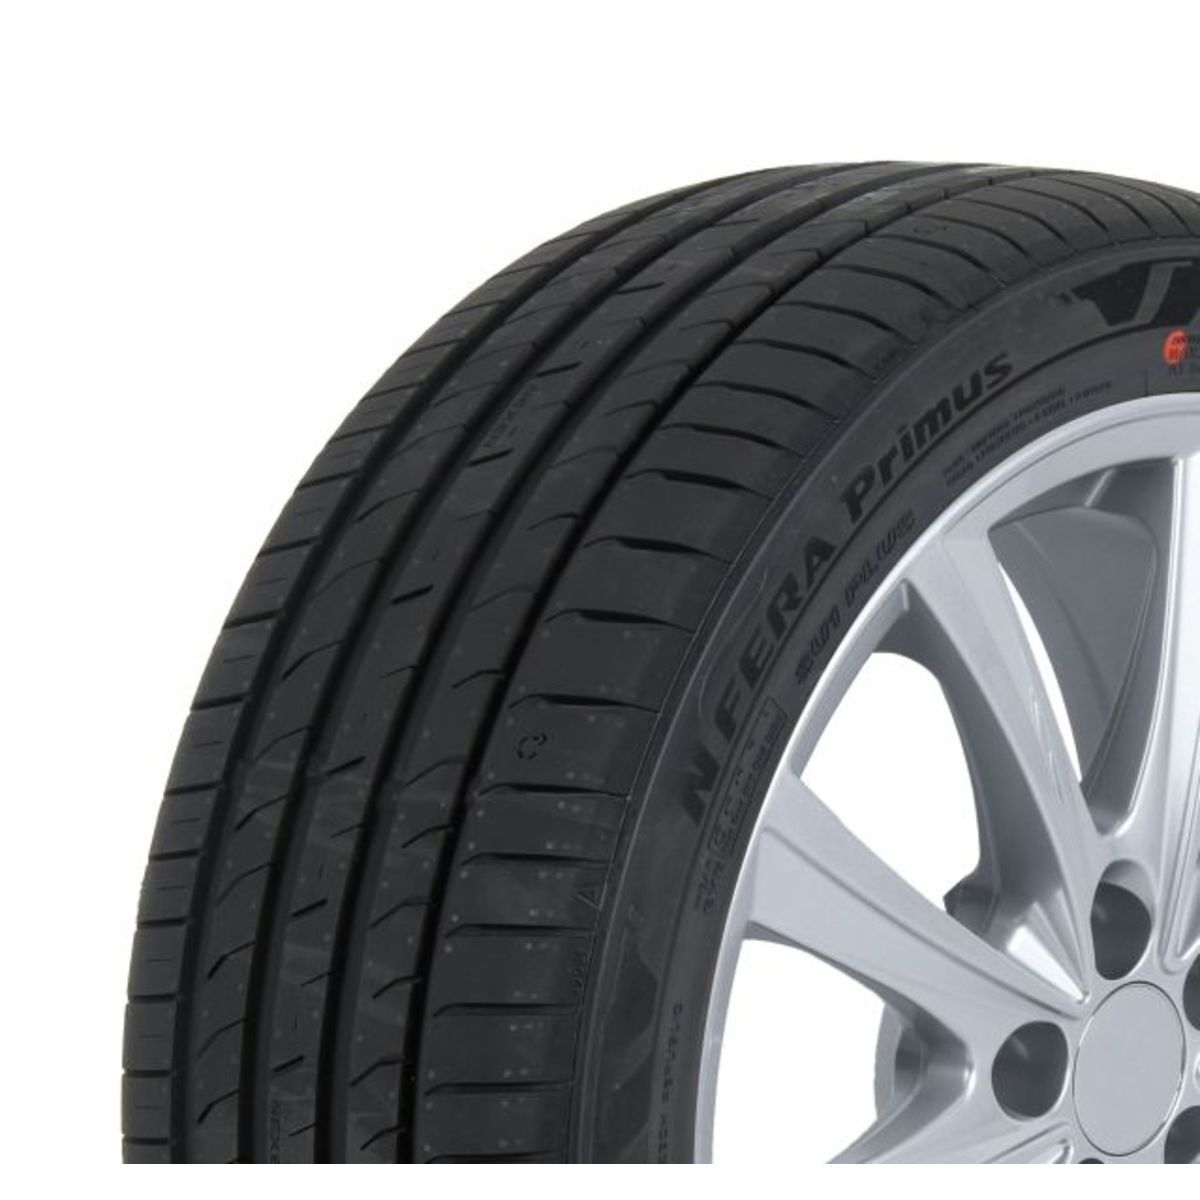 Neumáticos de verano NEXEN NFera Primus 205/50R17 XL 93W